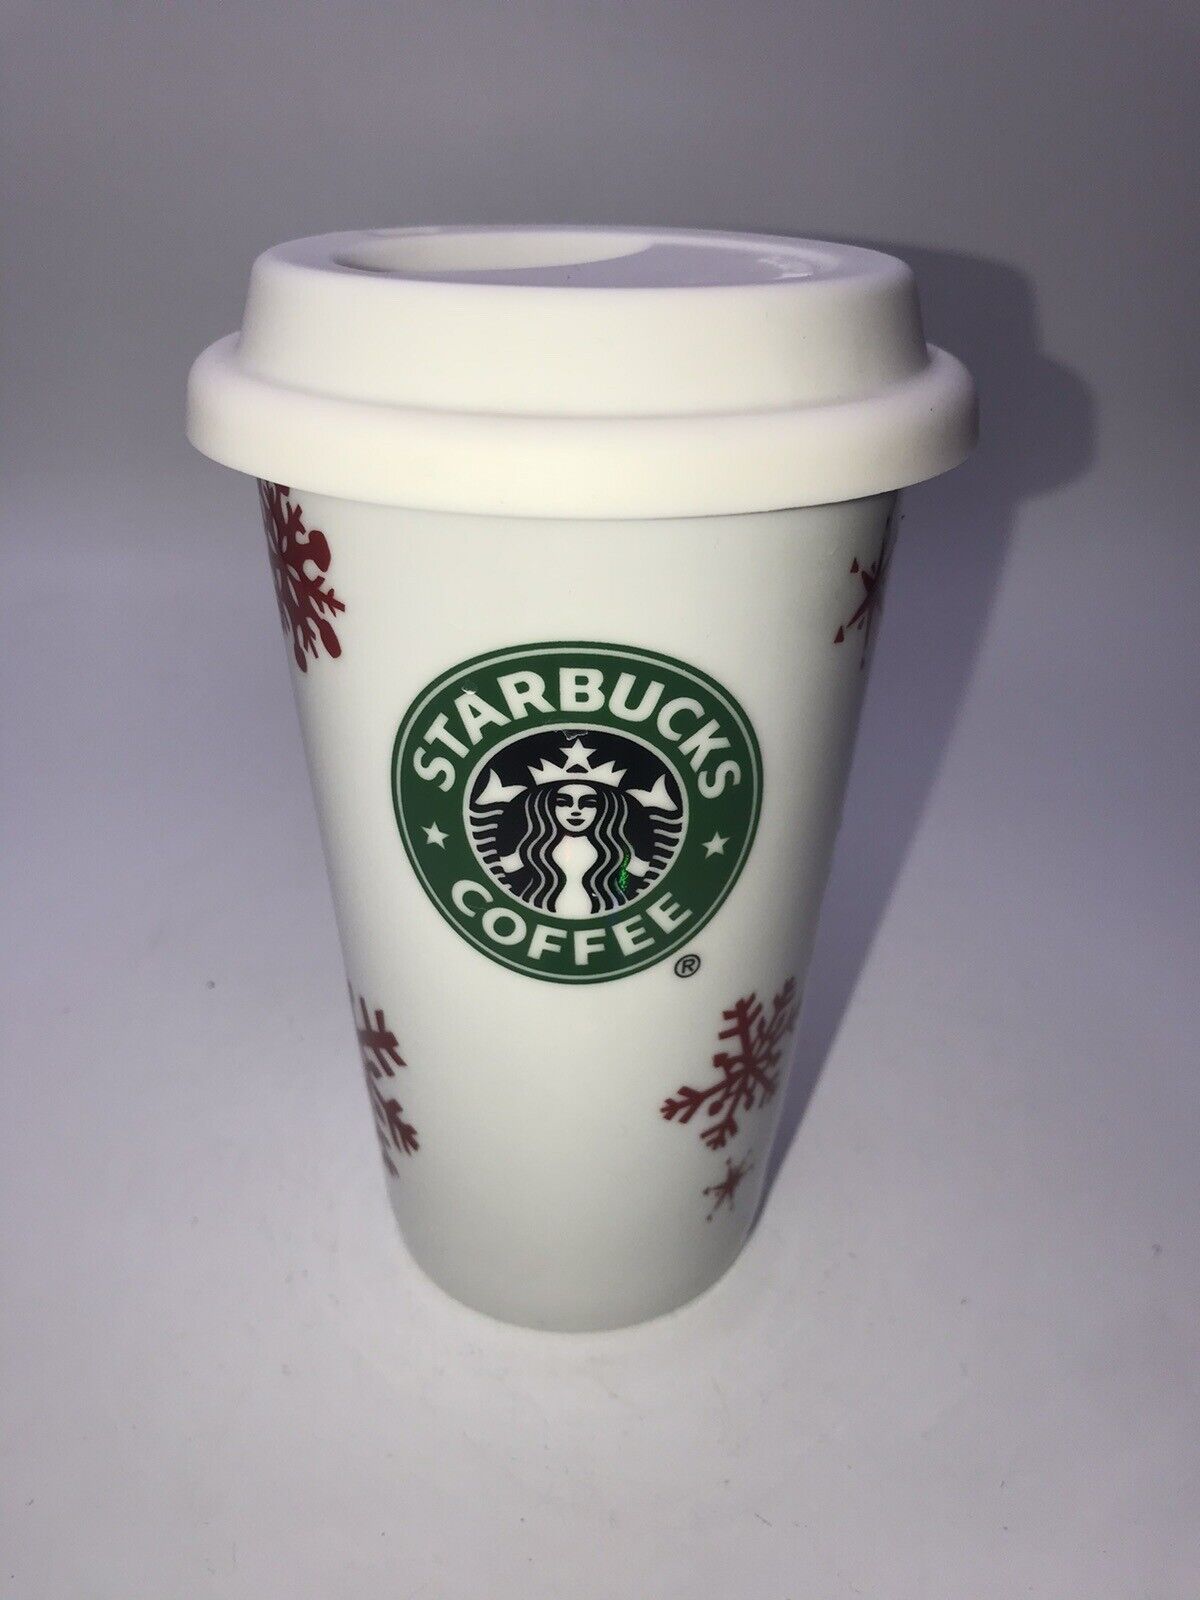 2010 Starbucks Coffee Travel Mug Ceramic Christmas Red Snowflakes with Lid